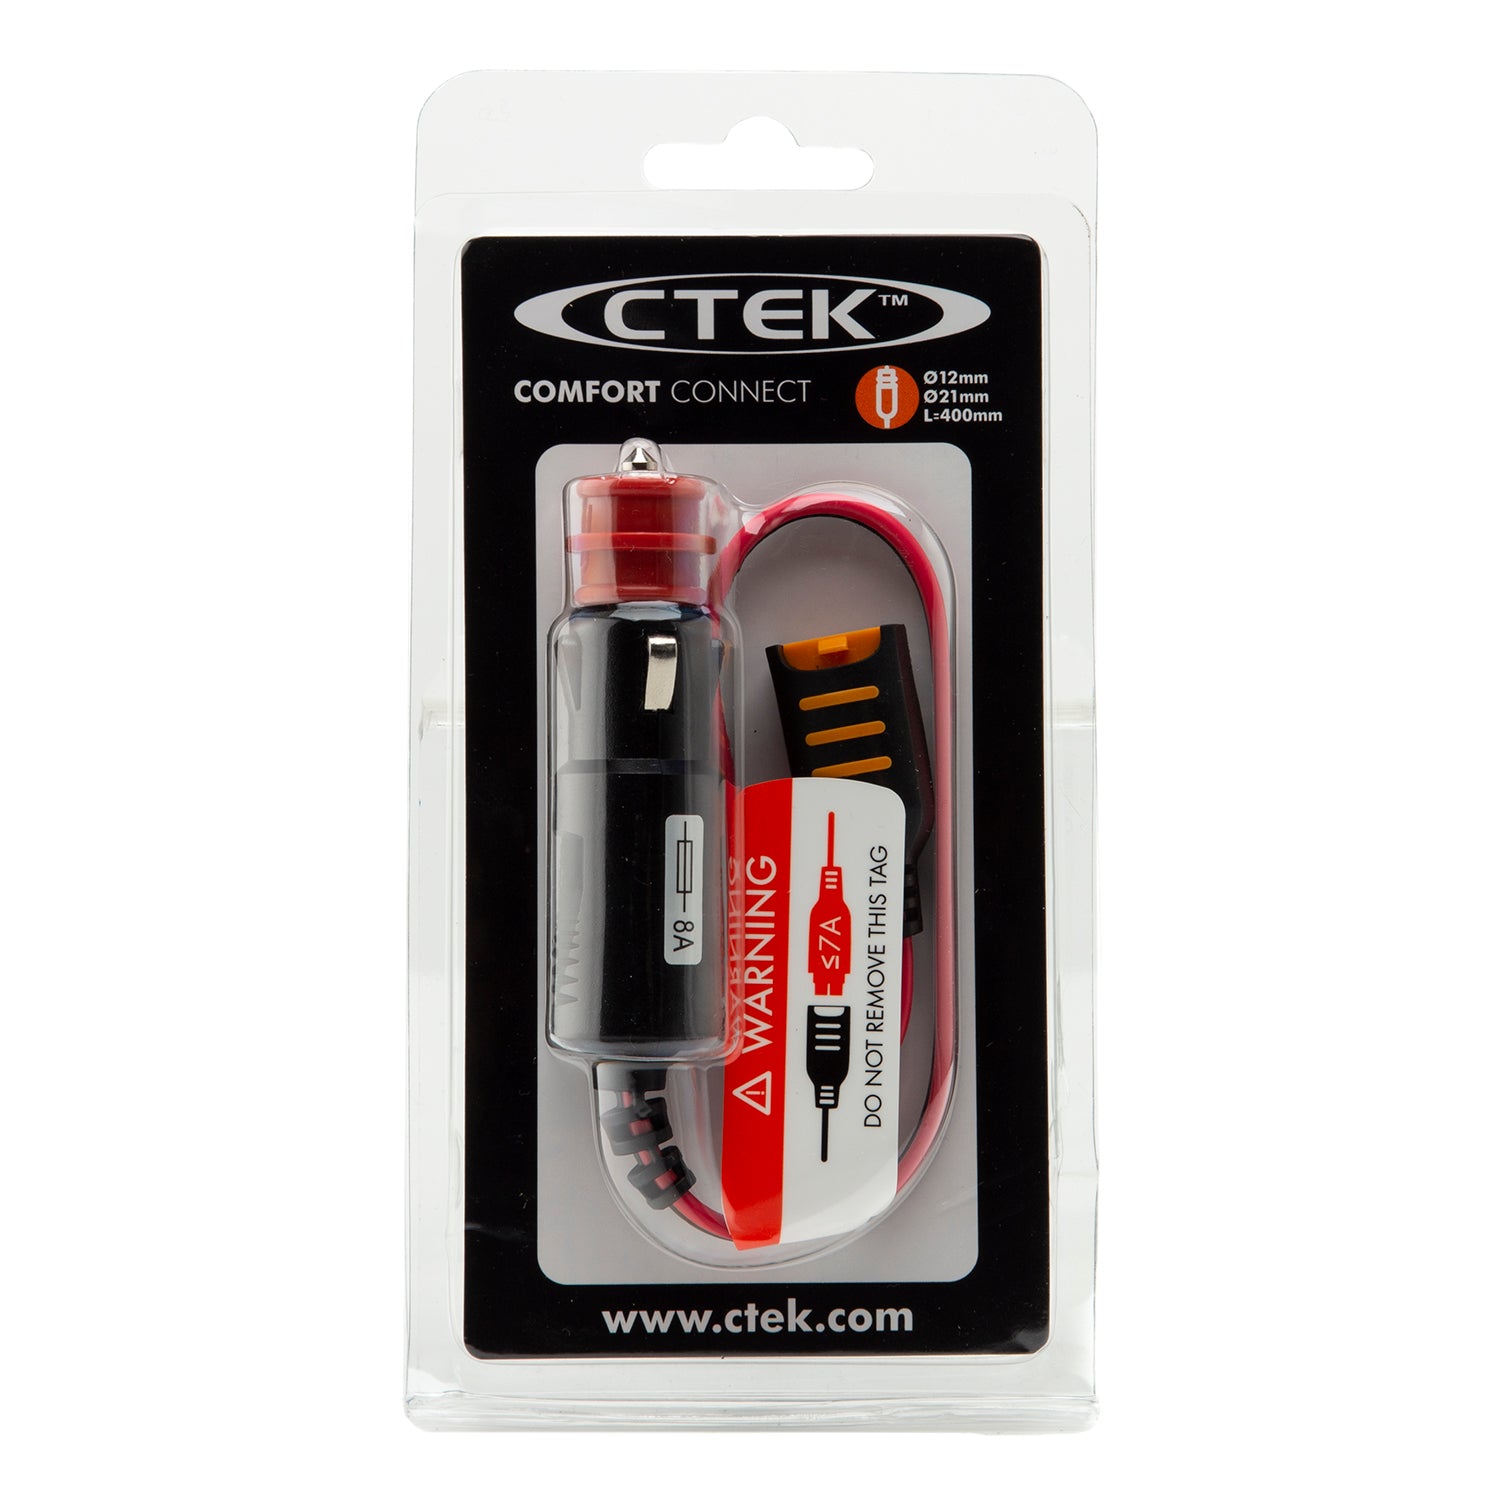 CTEK Autobatterie-Ladegerät CT5 To Go, 40-161, 12 V, 5 A – Böttcher AG